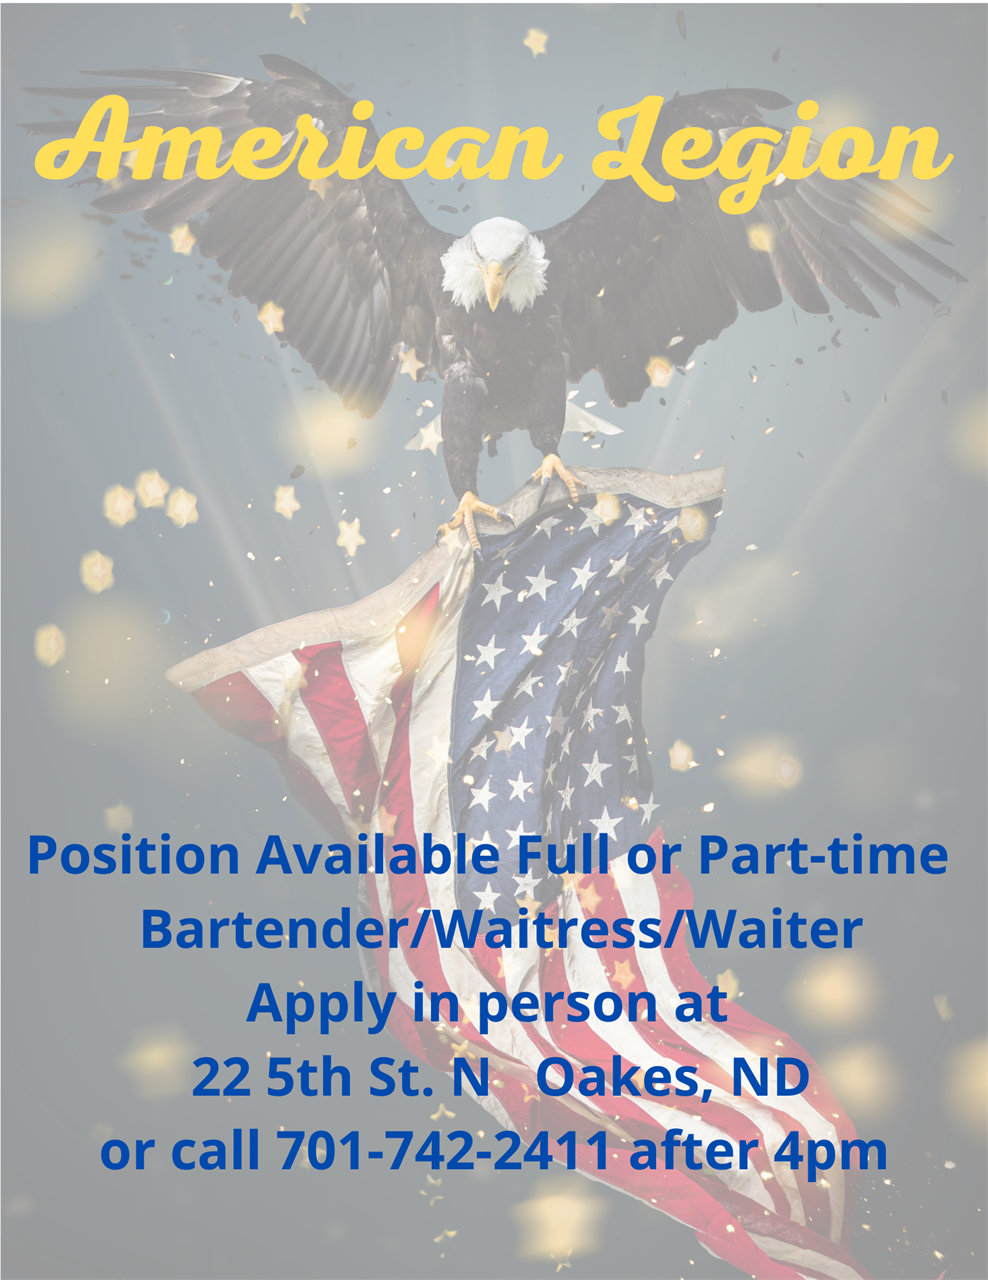 Bartender/Waitress/Waiter at American Legion